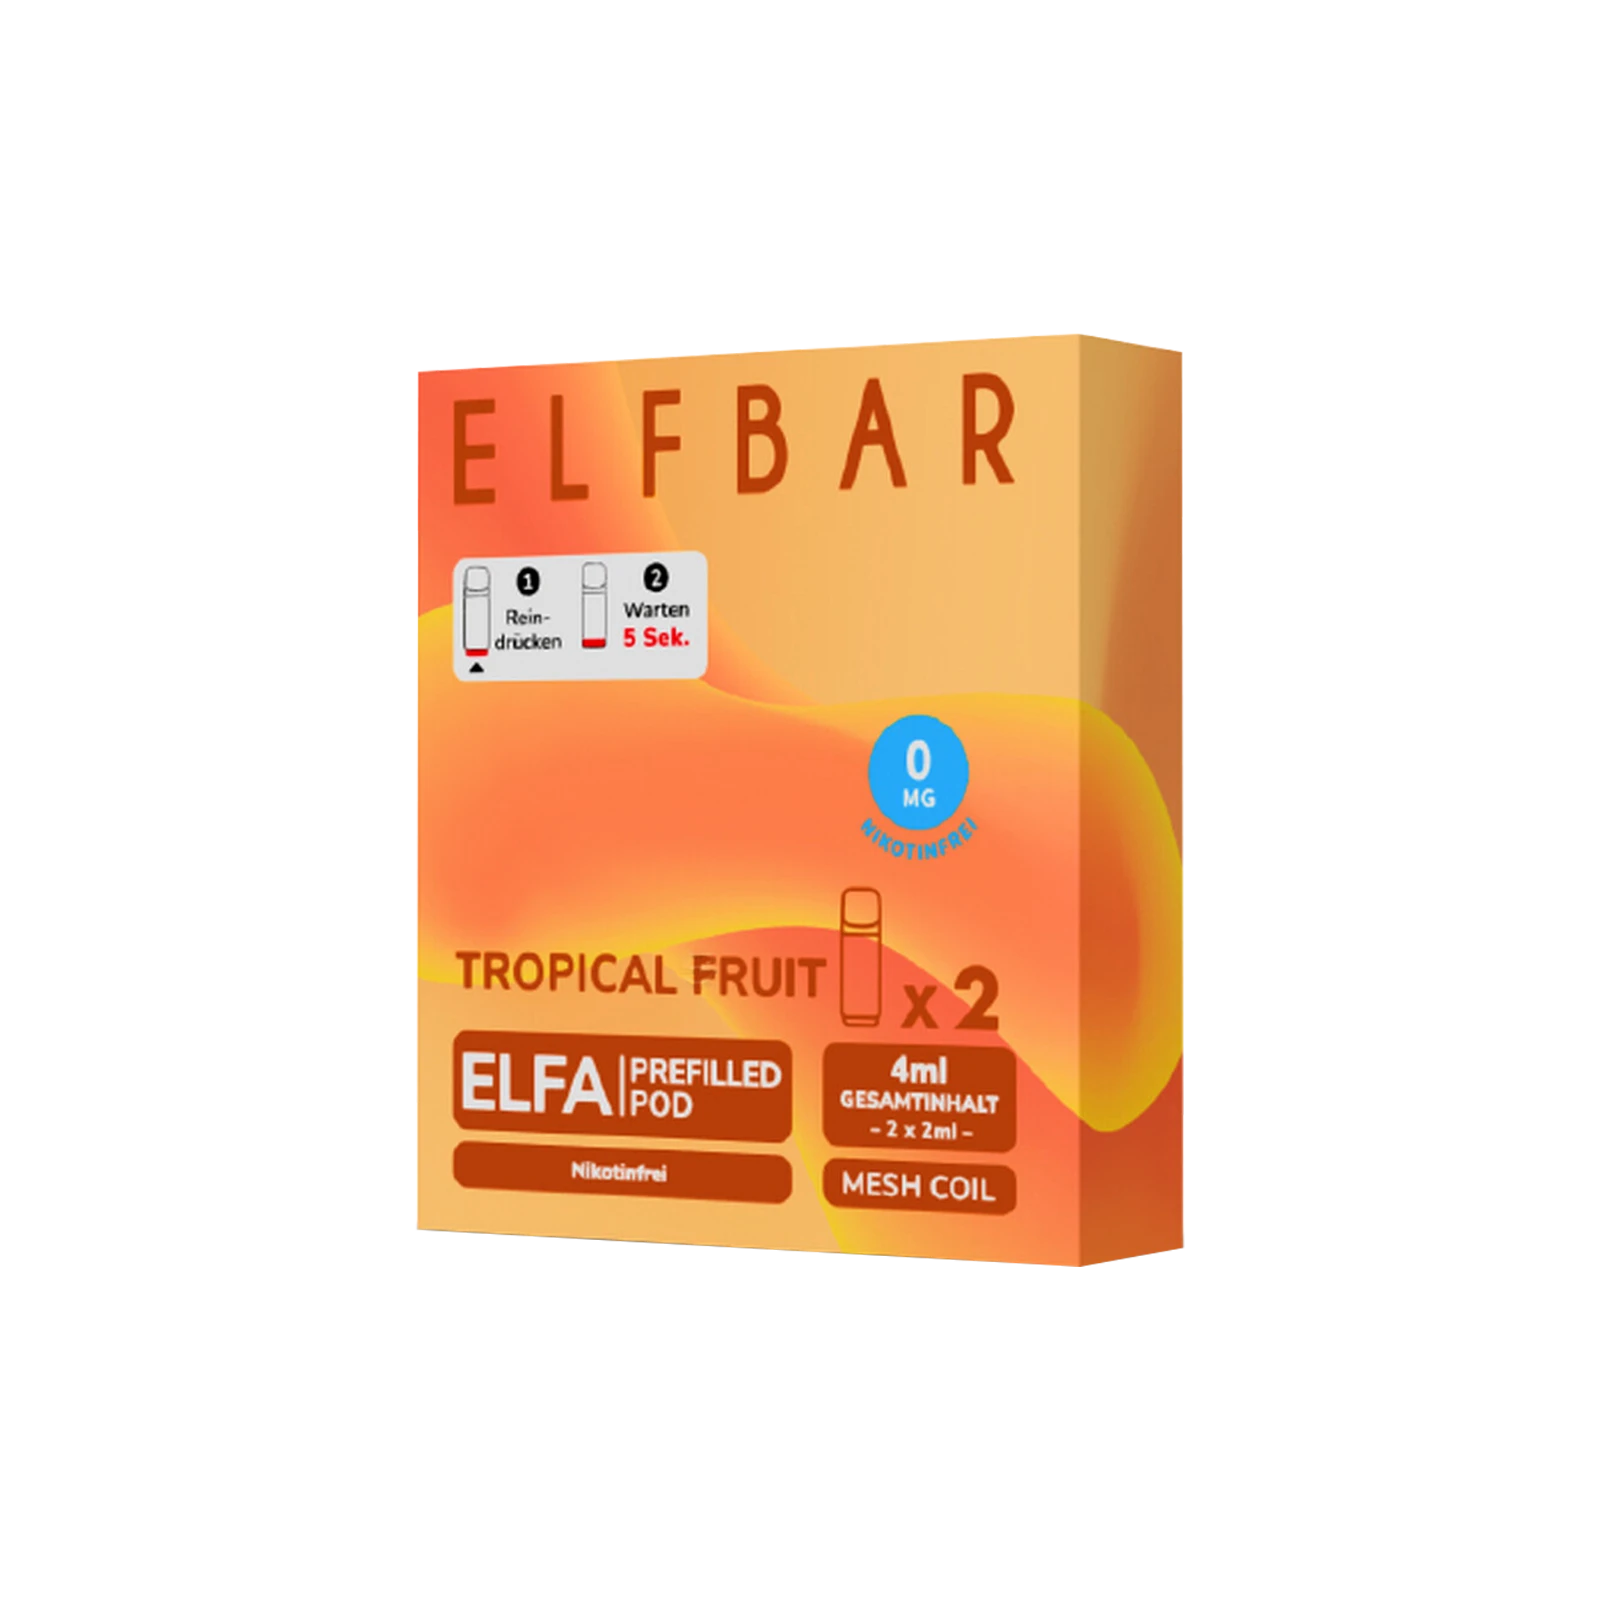 Elf Bar ELFA CP Tropical Fruit Nikotinfrei | Prefilled Pods günstig bestellen 1